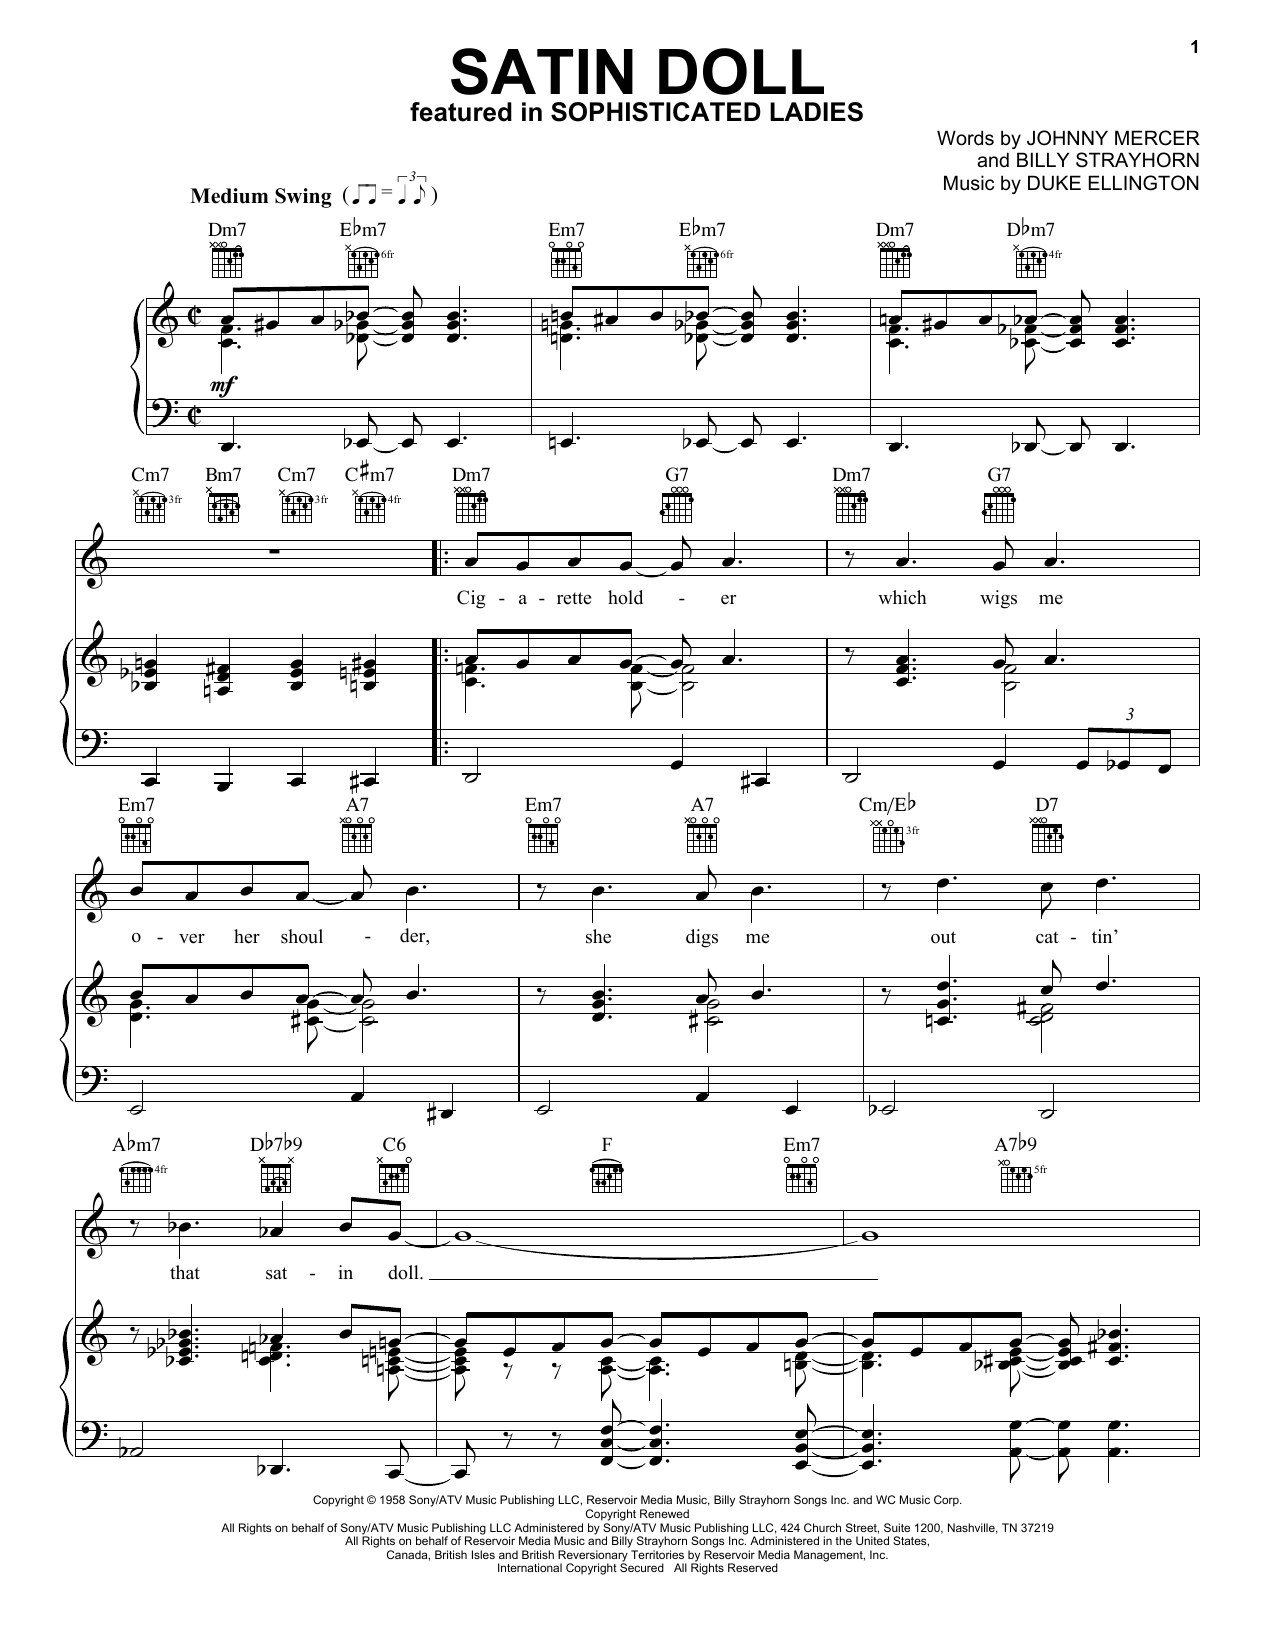 Duke Ellington Satin Doll Sheet Music Notes & Chords for Easy Piano - Download or Print PDF